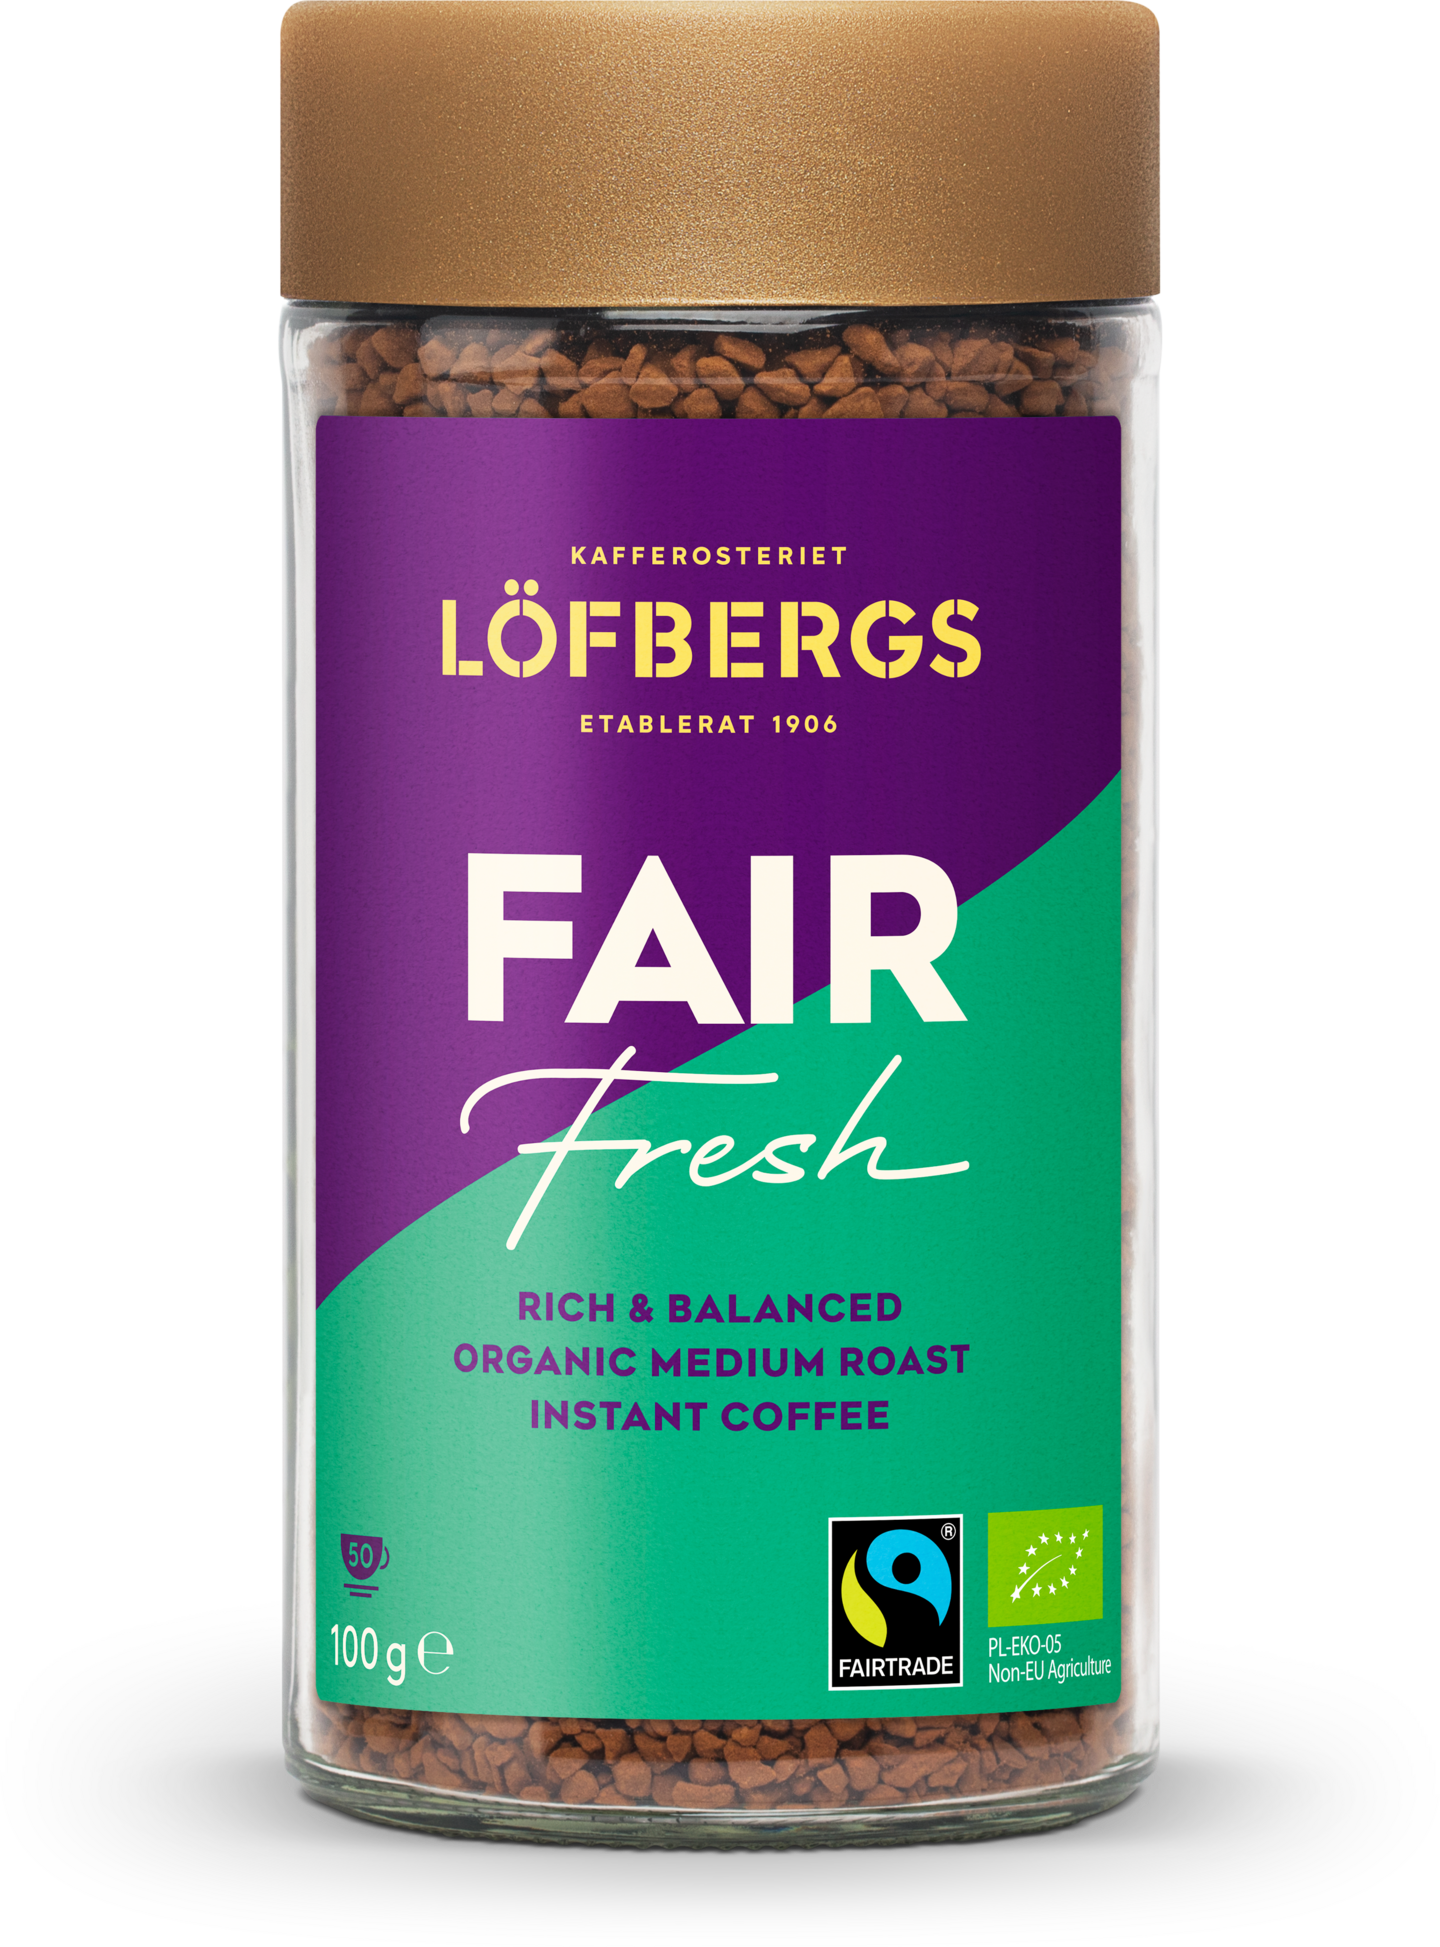 Löfbergs Fair Fresh Instant pikakahvi 100 g Reilu kauppa, luomu